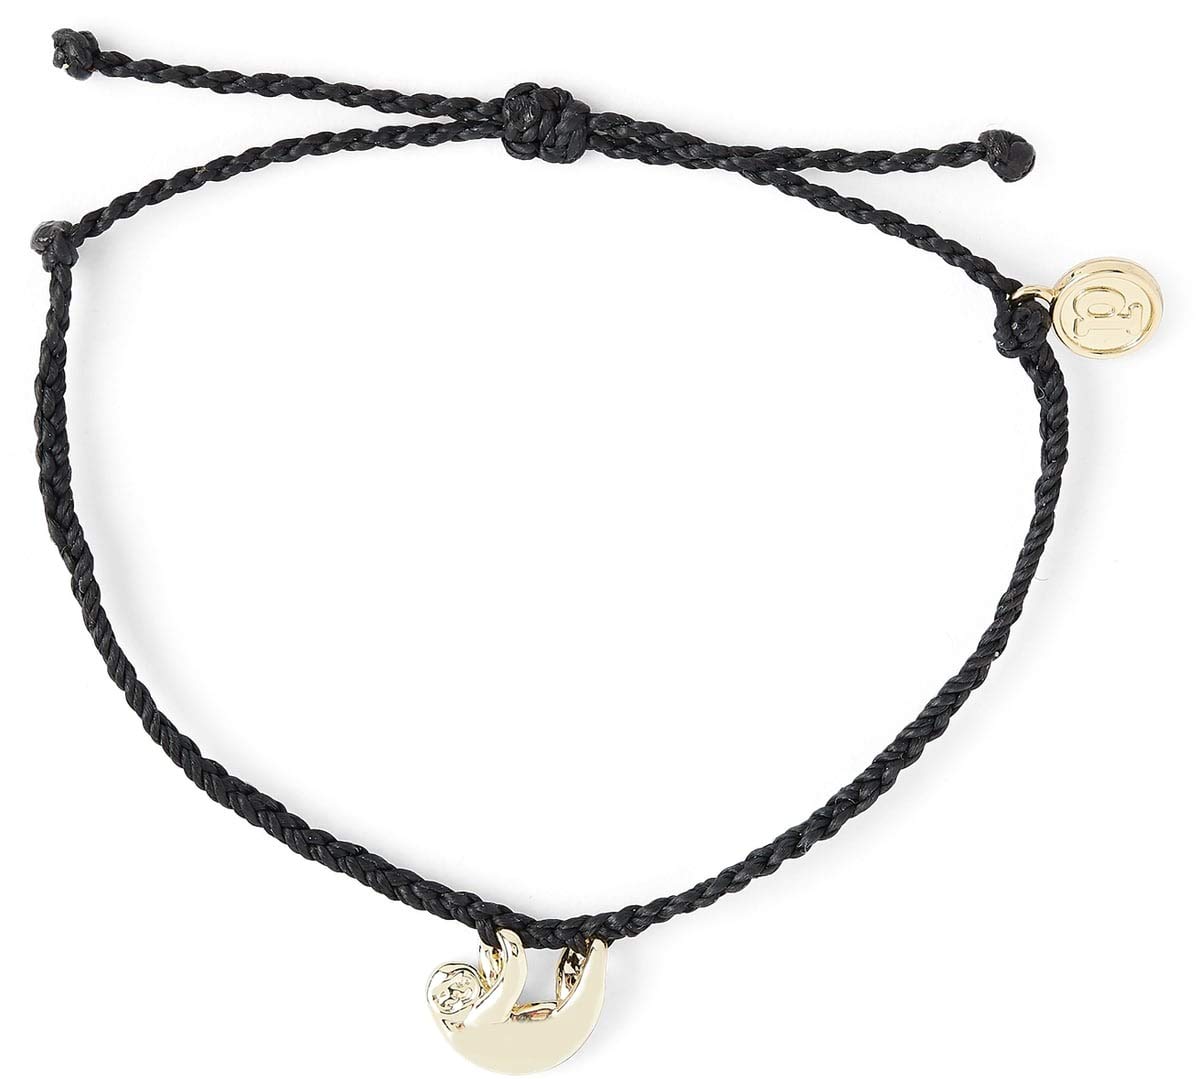 Pura Vida Gold or Silver Sloth Charity Wildlife Bracelet - 100% Waterproof, Adjustable Band - Coated Charm